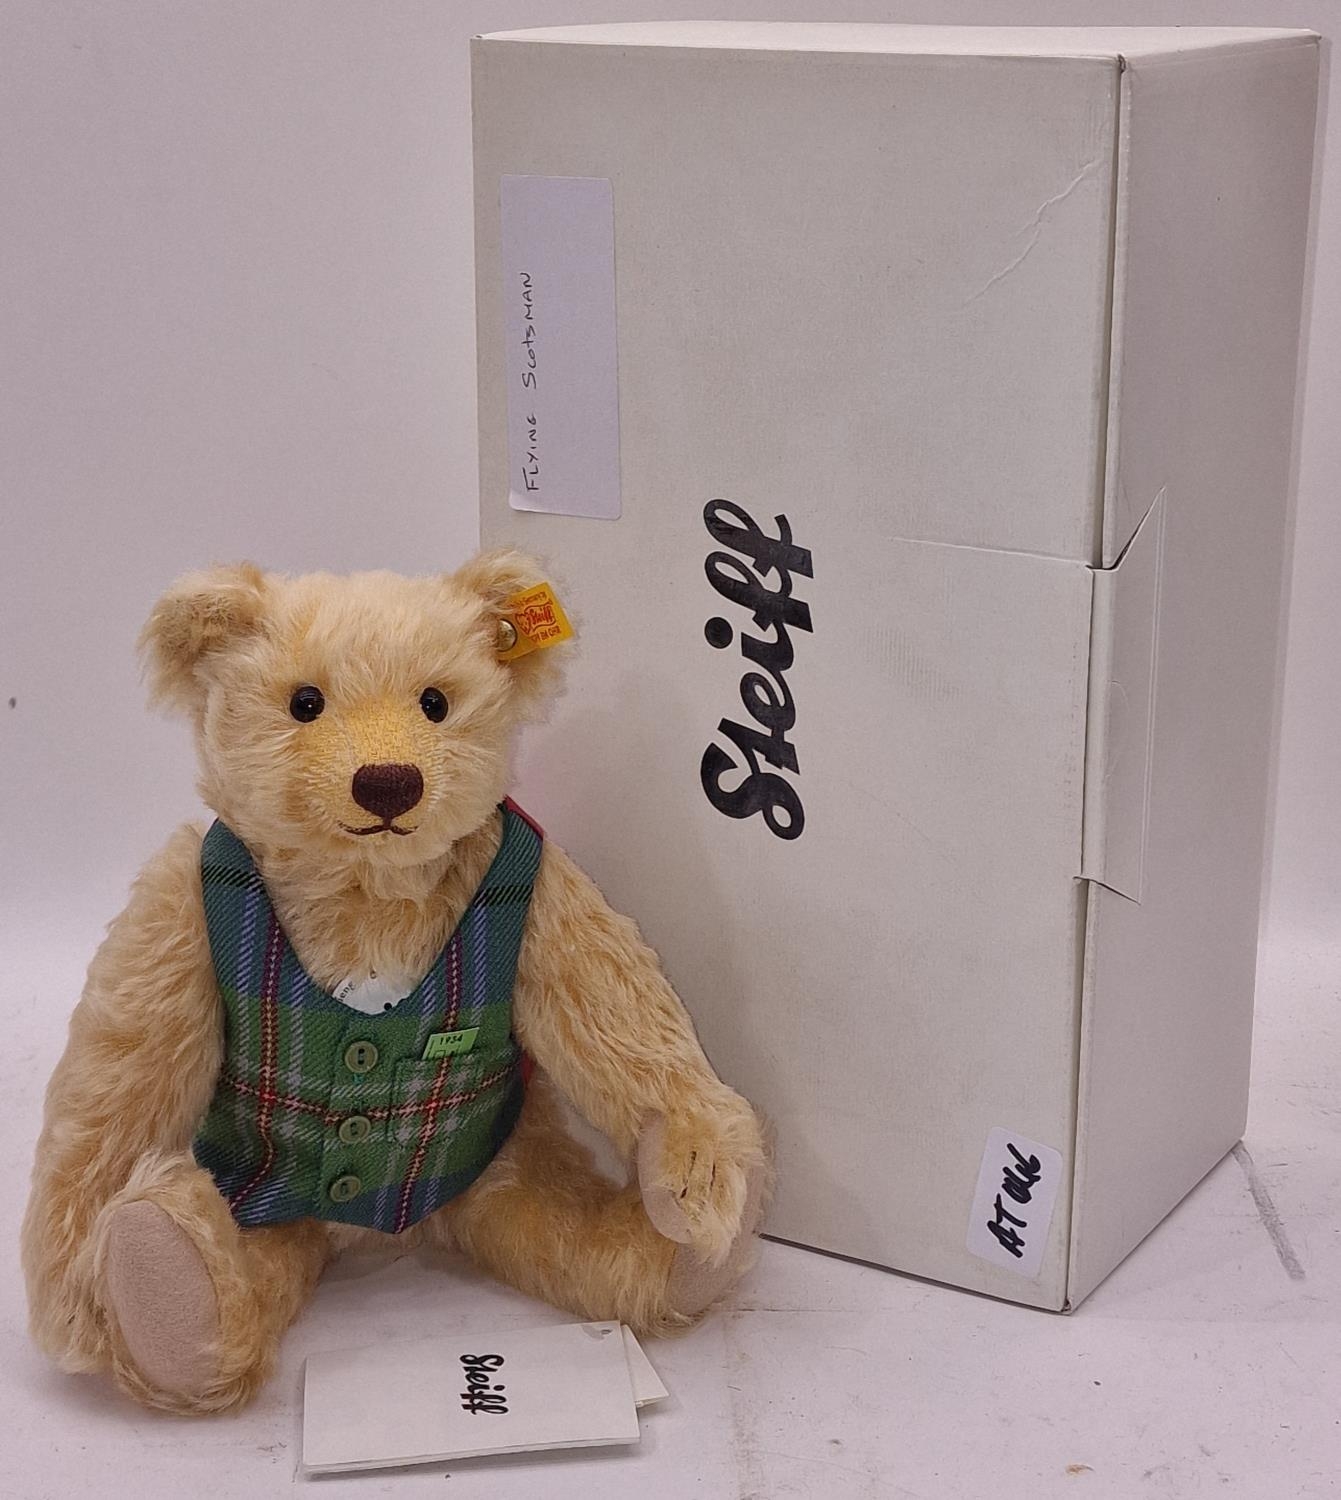 Steiff Danbury Mint Flying Scotsman teddy bear boxed with certificate.